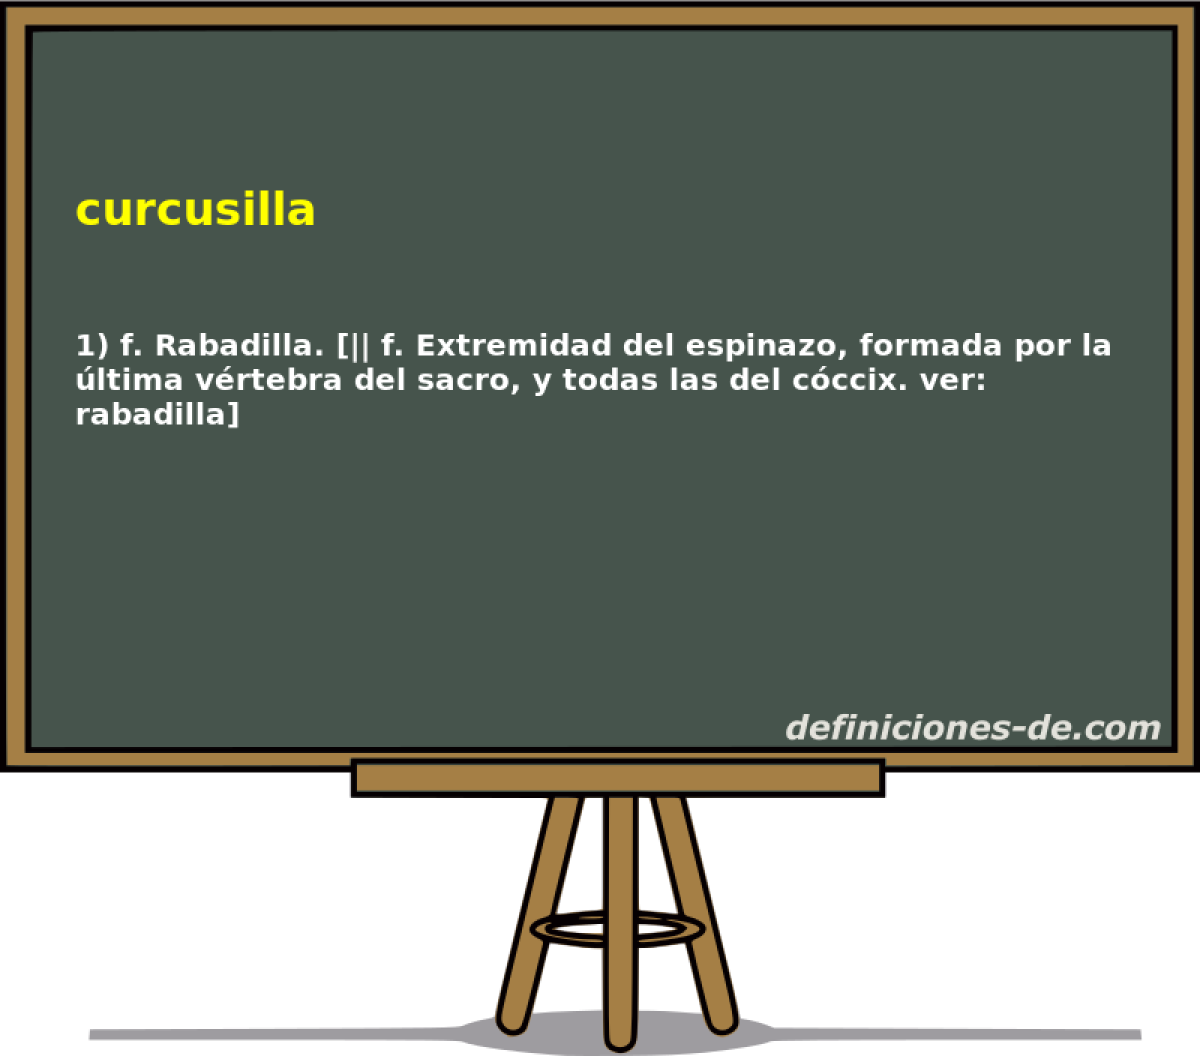 curcusilla 